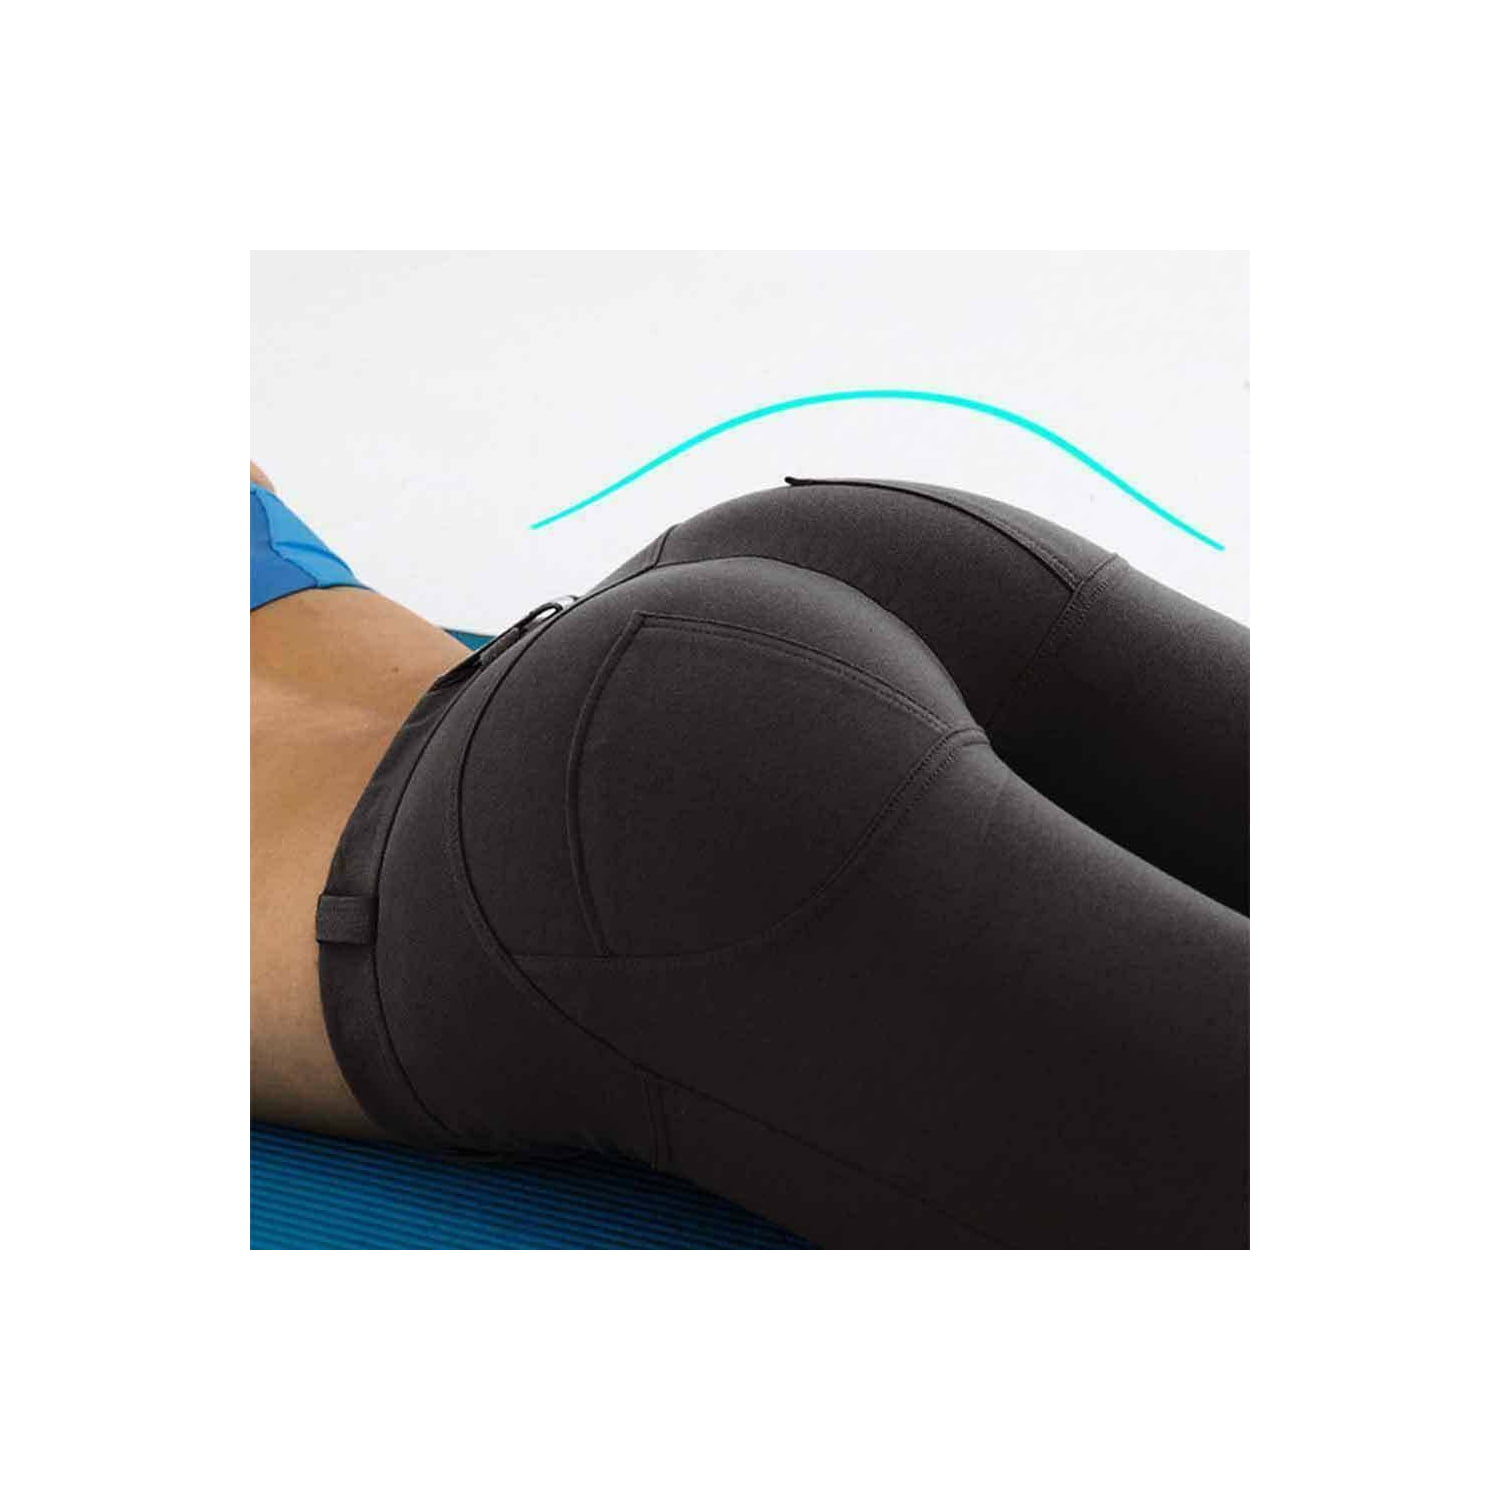 Interloper Low Rise Butt Lift Yoga Pants Fitness Leggings Stretch Pants   Black  eBay